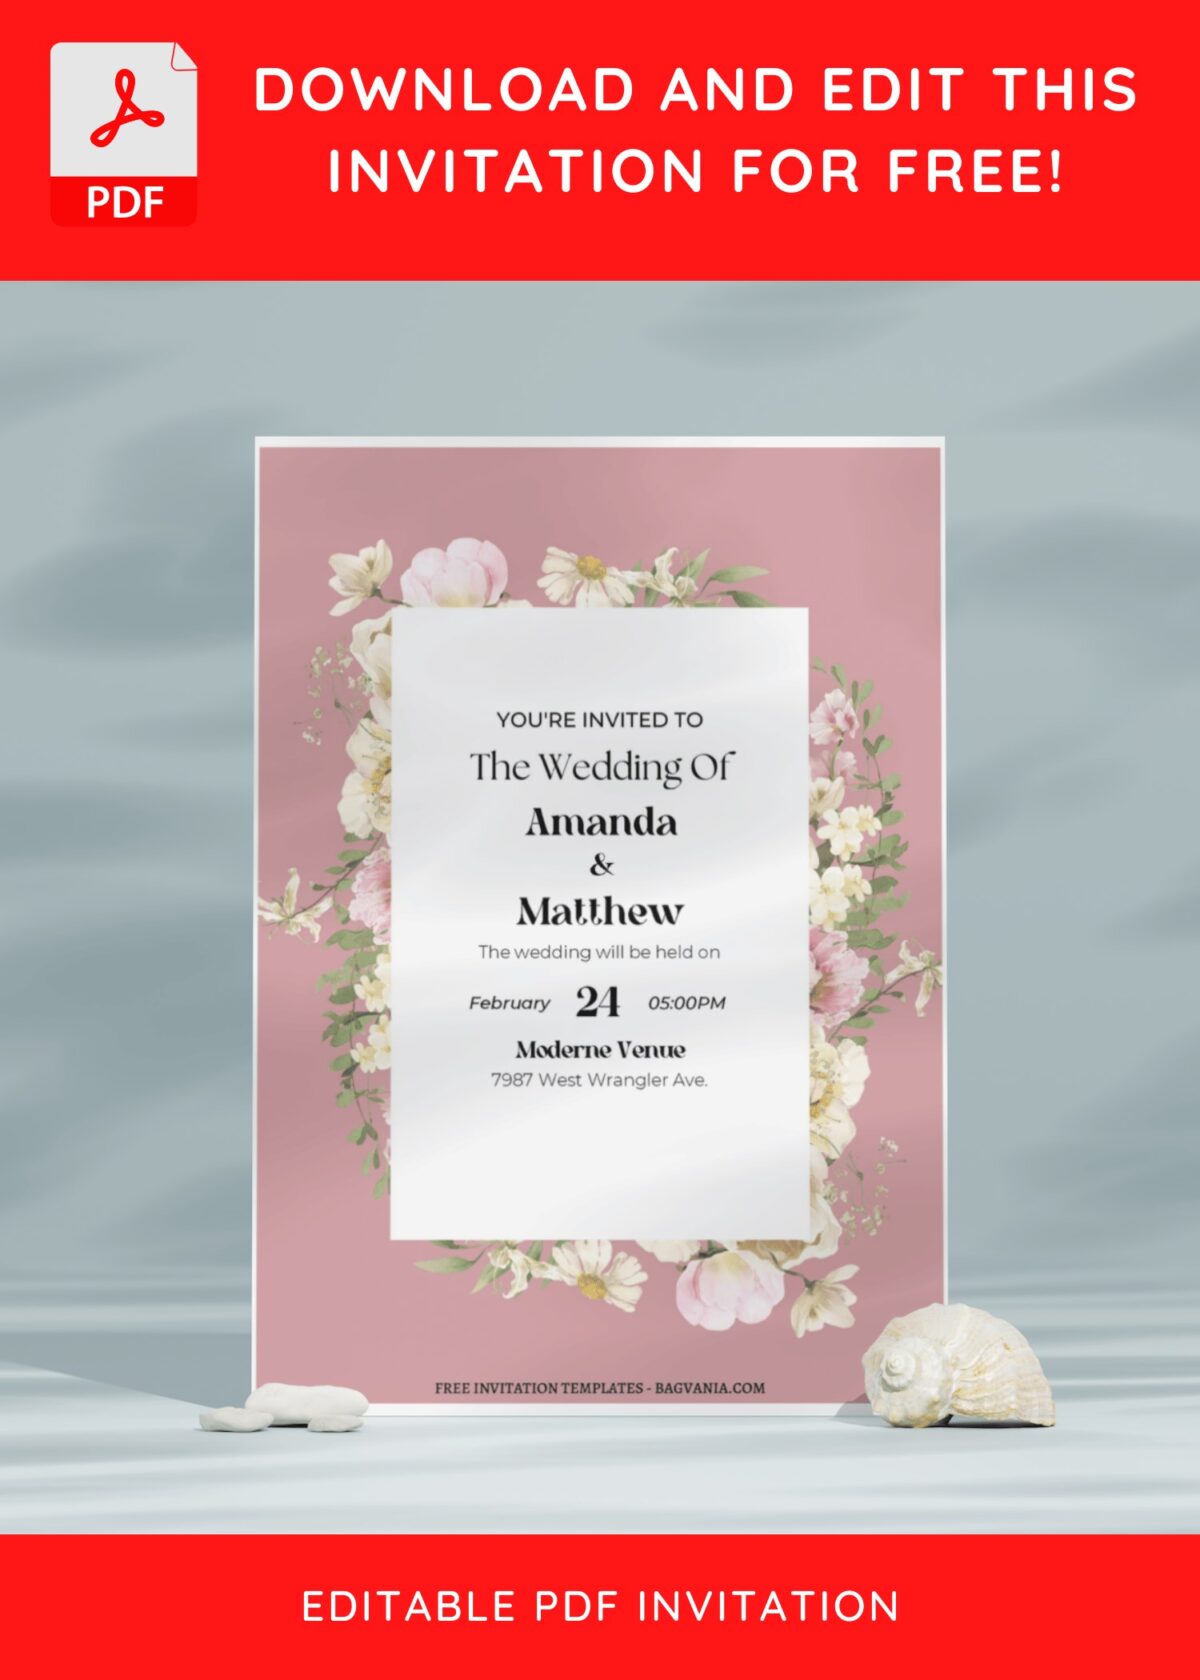 (Free Editable PDF) Pastel Floral Frame Wedding Invitation Templates E